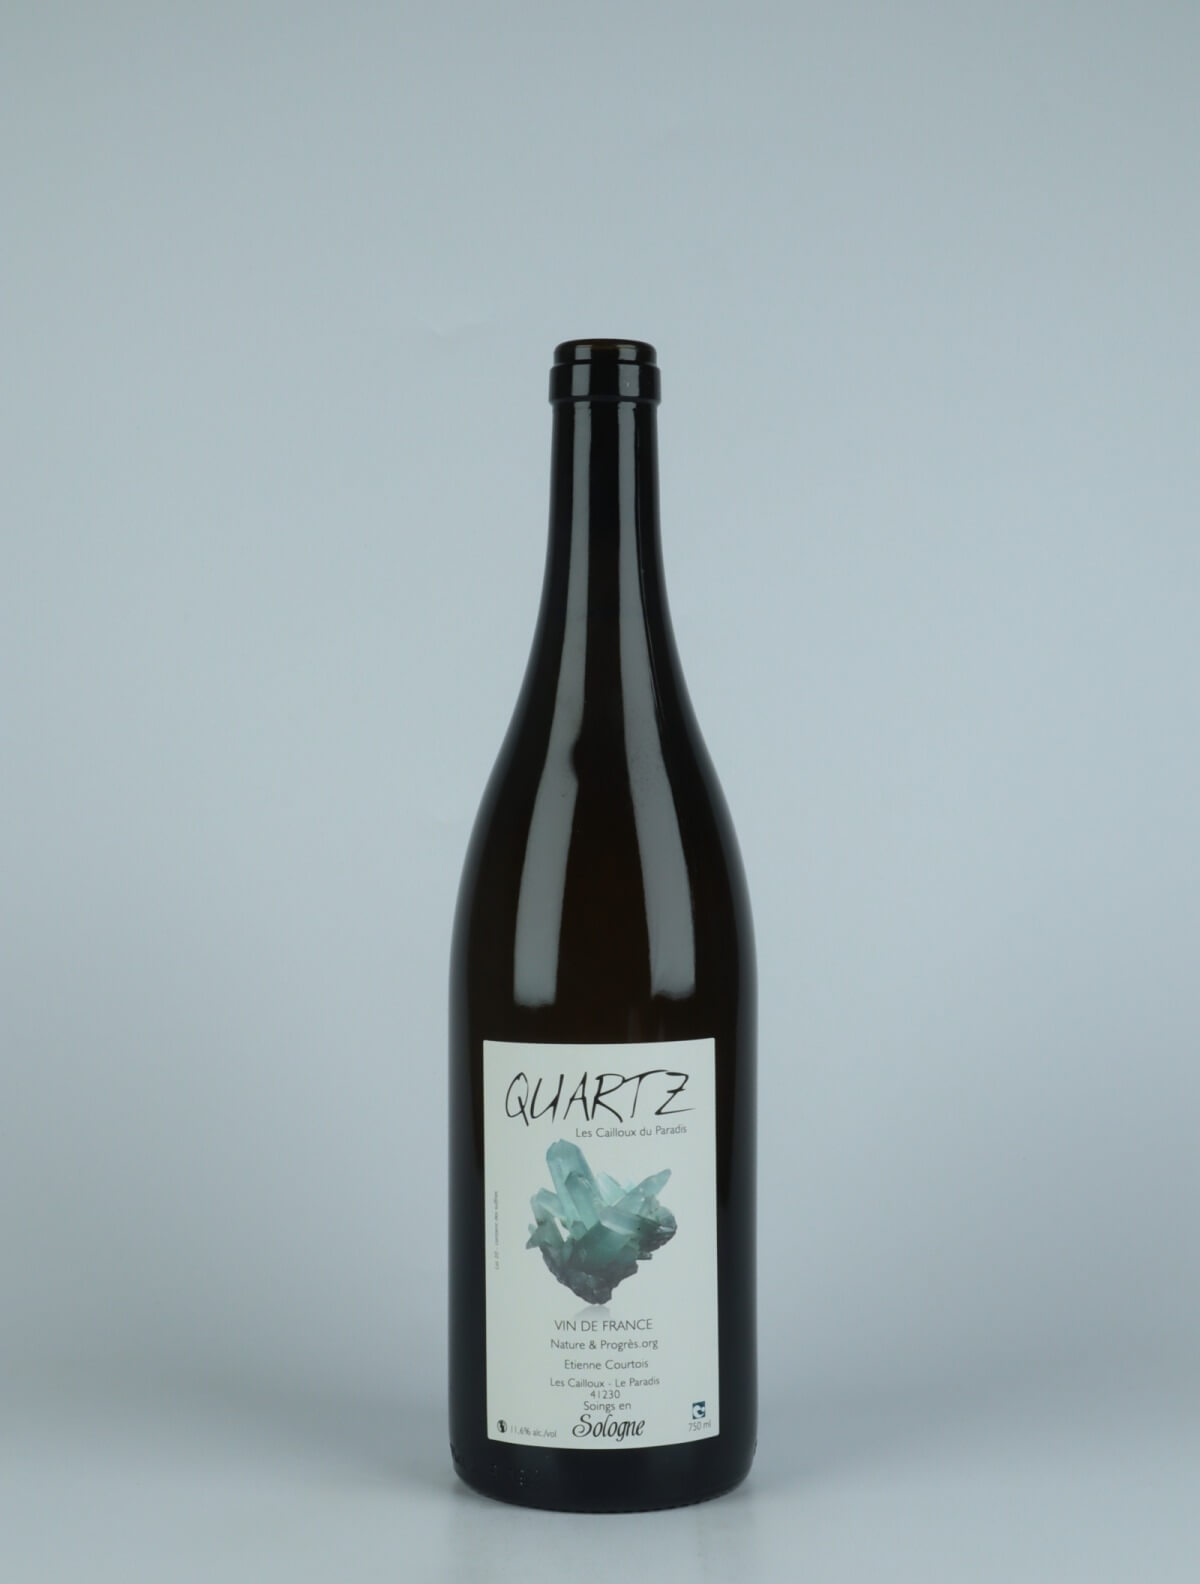 A bottle 2020 Quartz White wine from Etienne Courtois, Loire in France